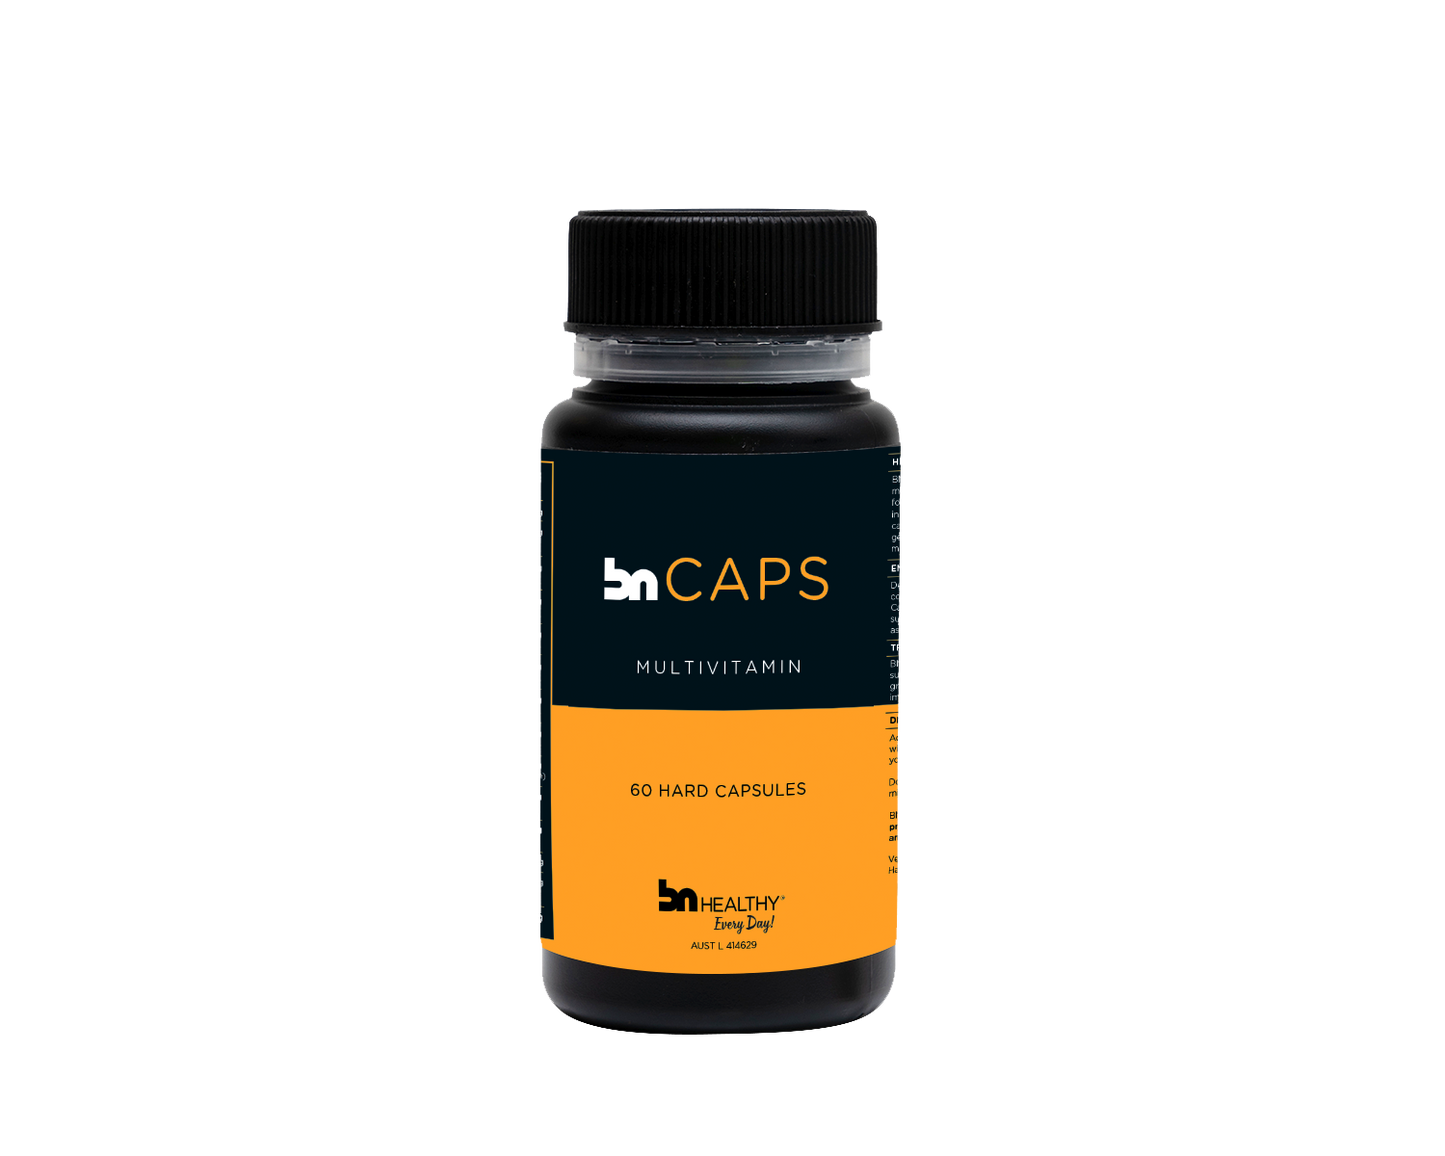 BN Caps - Multivitamin Capsules - 6 Month Subscription - Save 25%